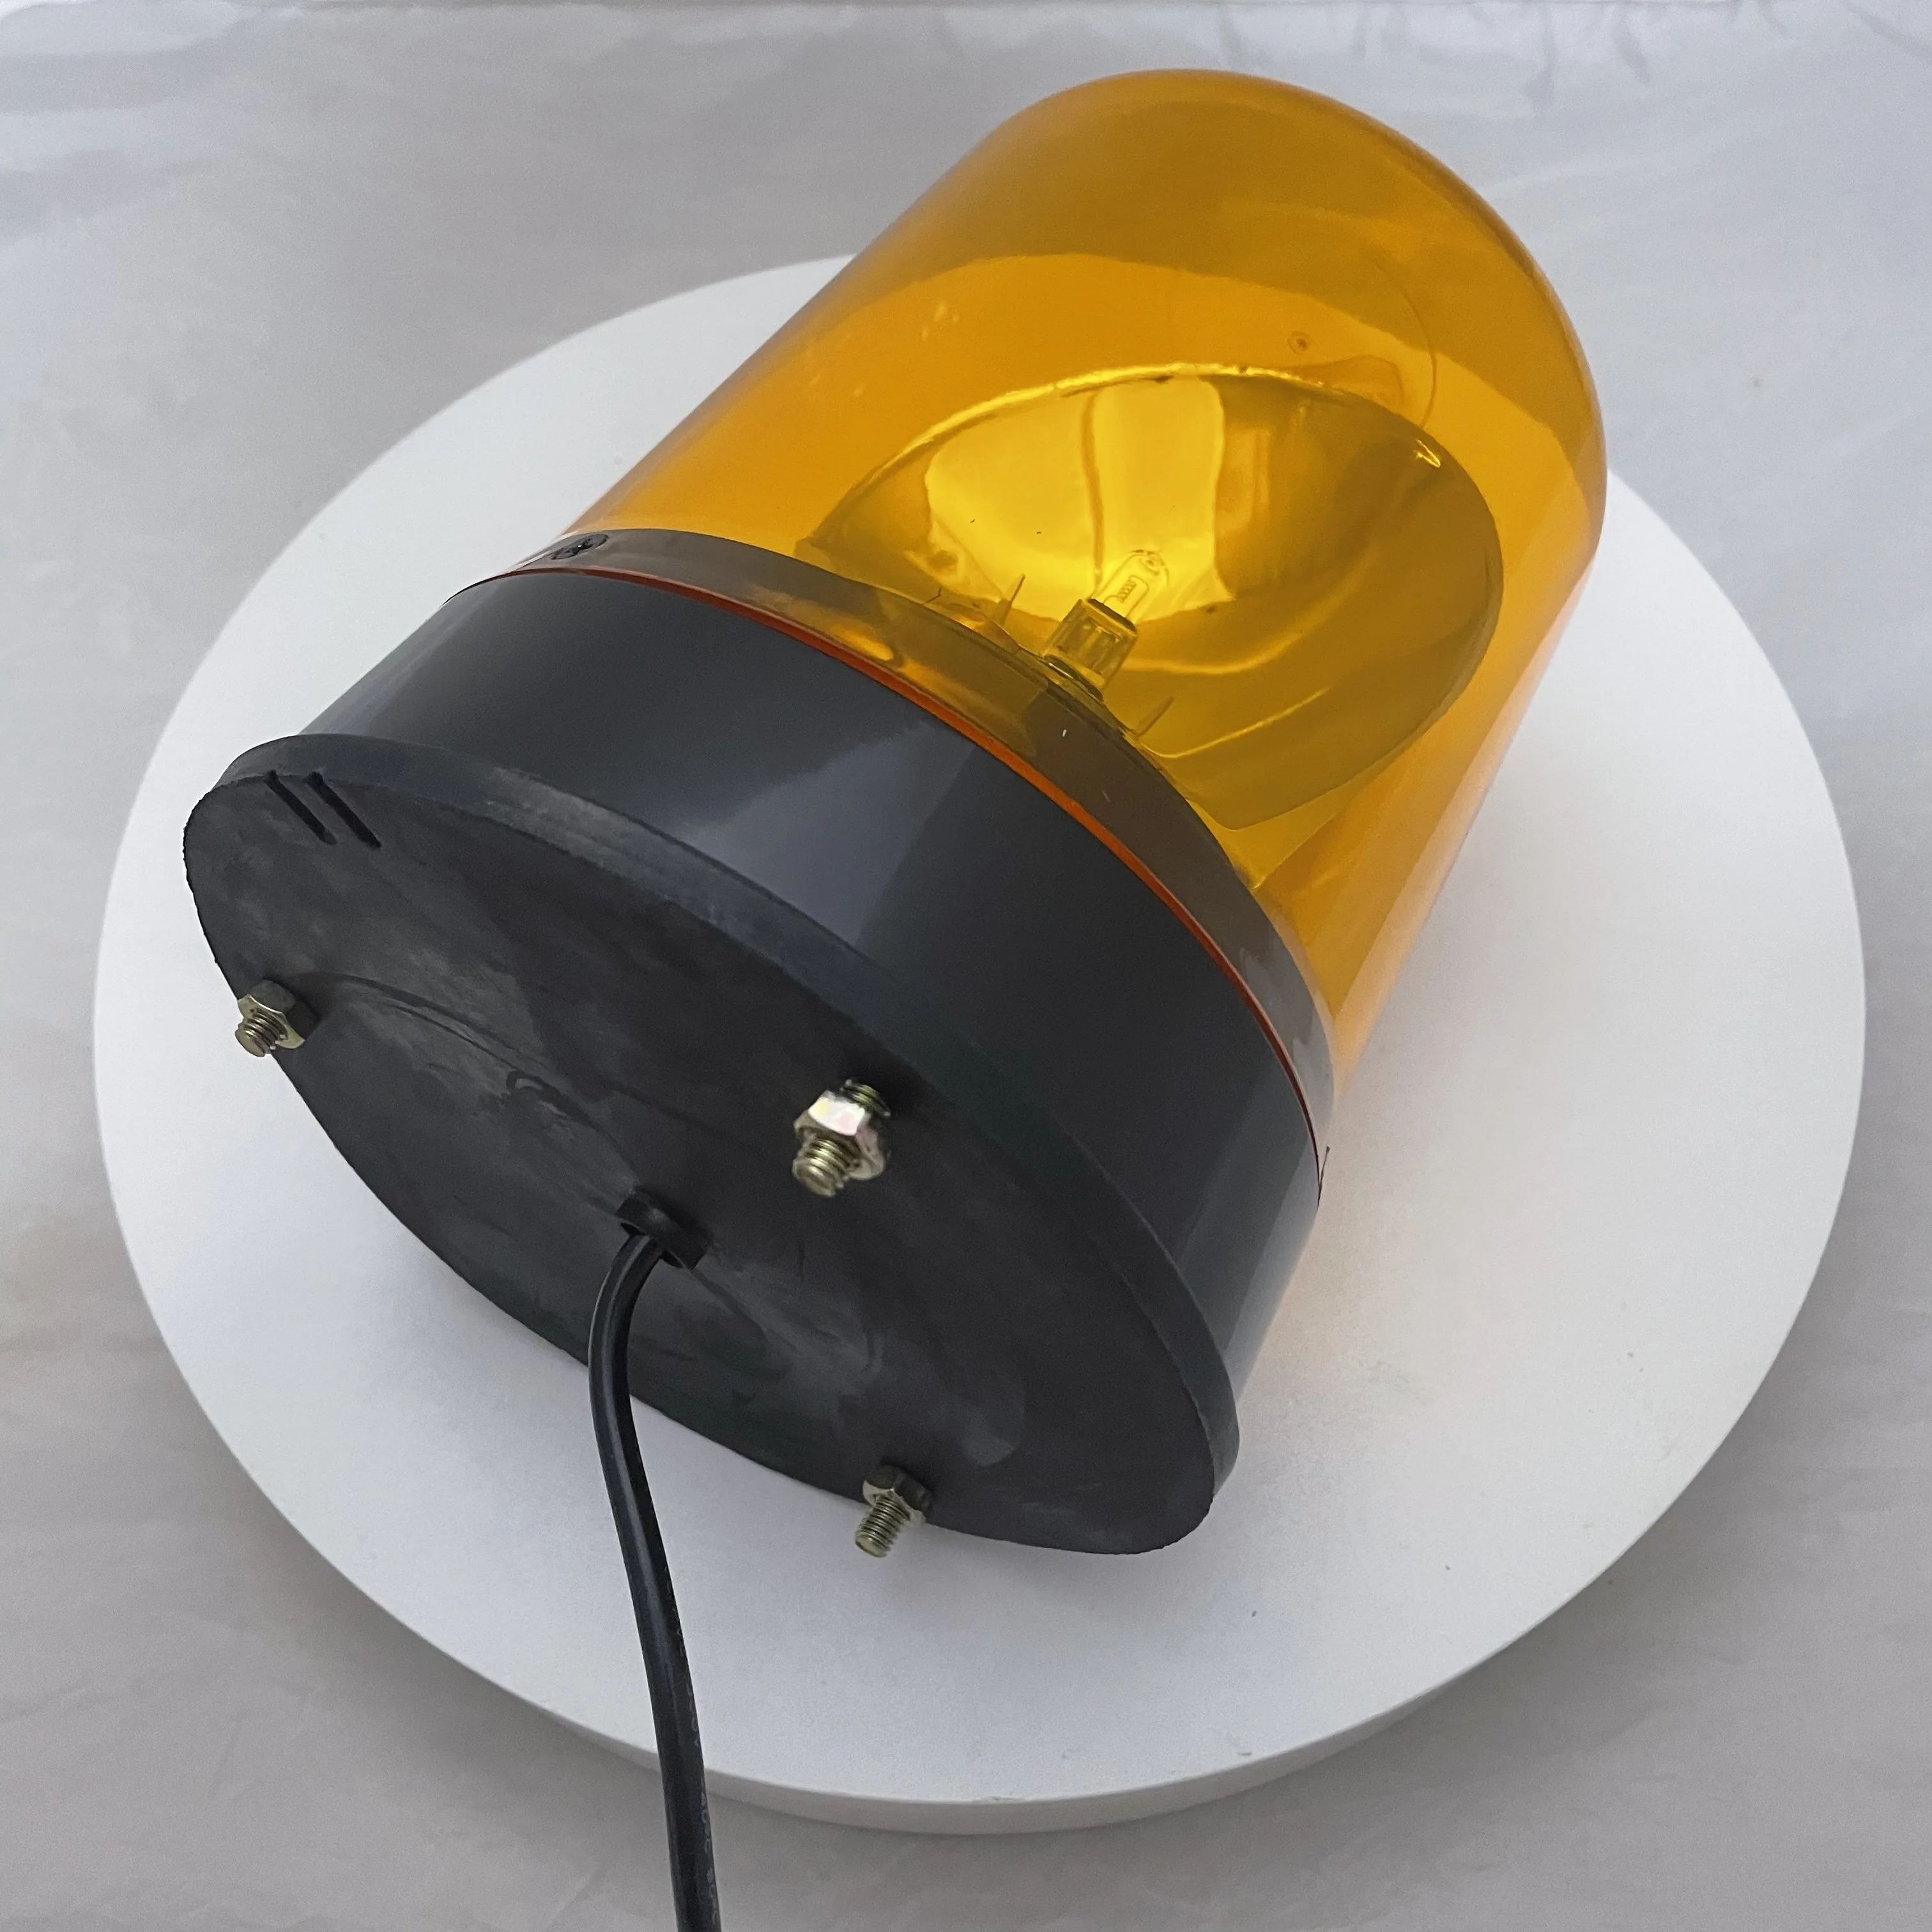 Wholesale DC12 / 24 V Mining Safety lights H1 Halogen Revolving Light Vehicle Top Rotating Emergency Lamp WL115  for Britax use